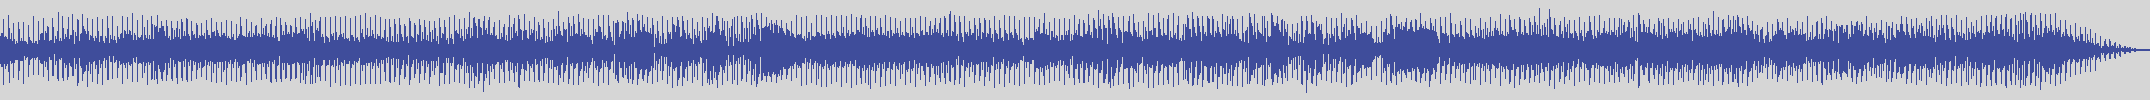 digiphonic_records [DPR009] Bernard Bess, The Fantastic Royal Orchestra - Hot Stuff ( Full Monty ) [Original Mix] audio wave form